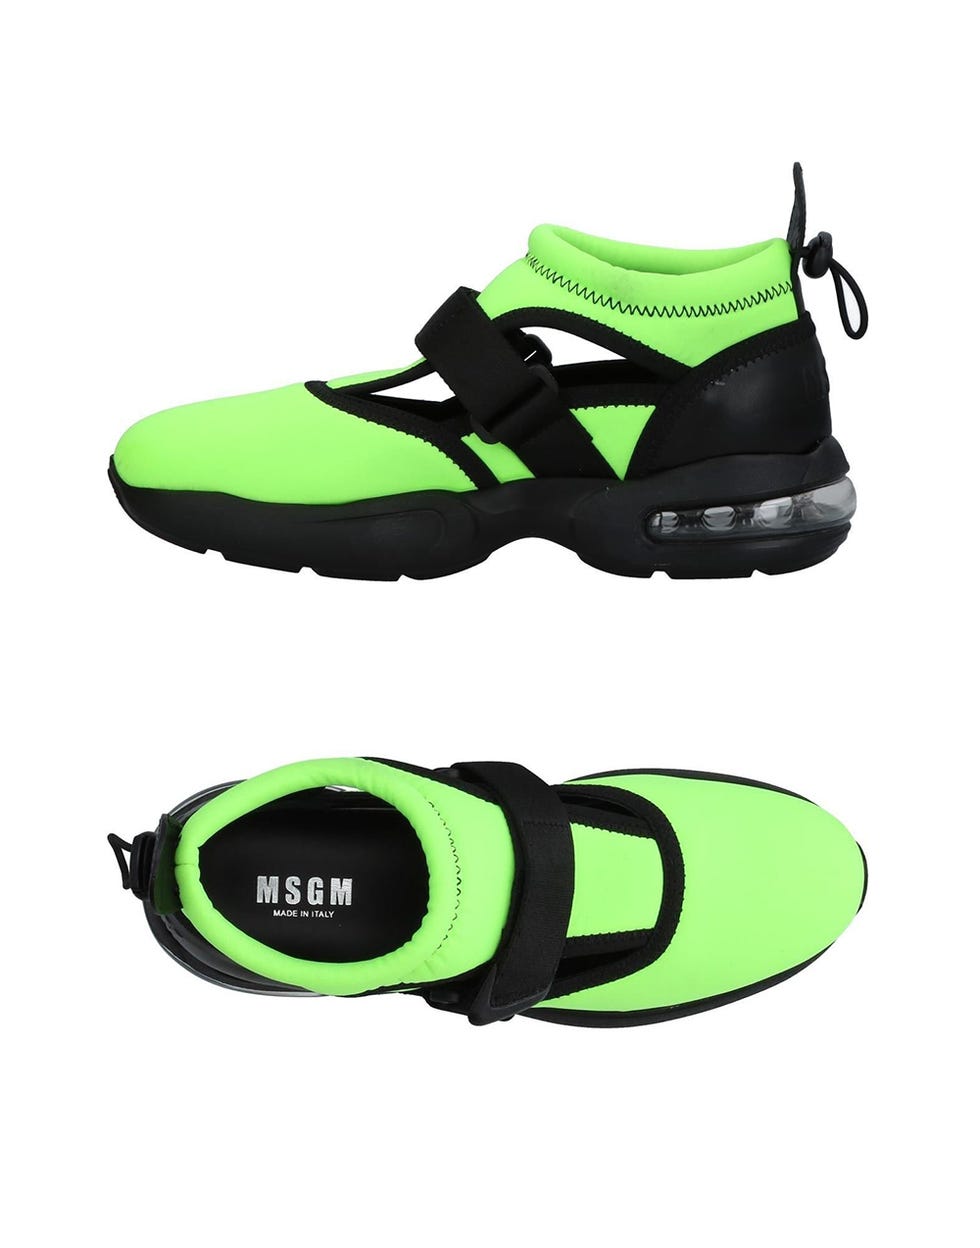 Footwear, Sneakers, Shoe, Green, Walking shoe, Outdoor shoe, Athletic shoe, Cross training shoe, Running shoe, 